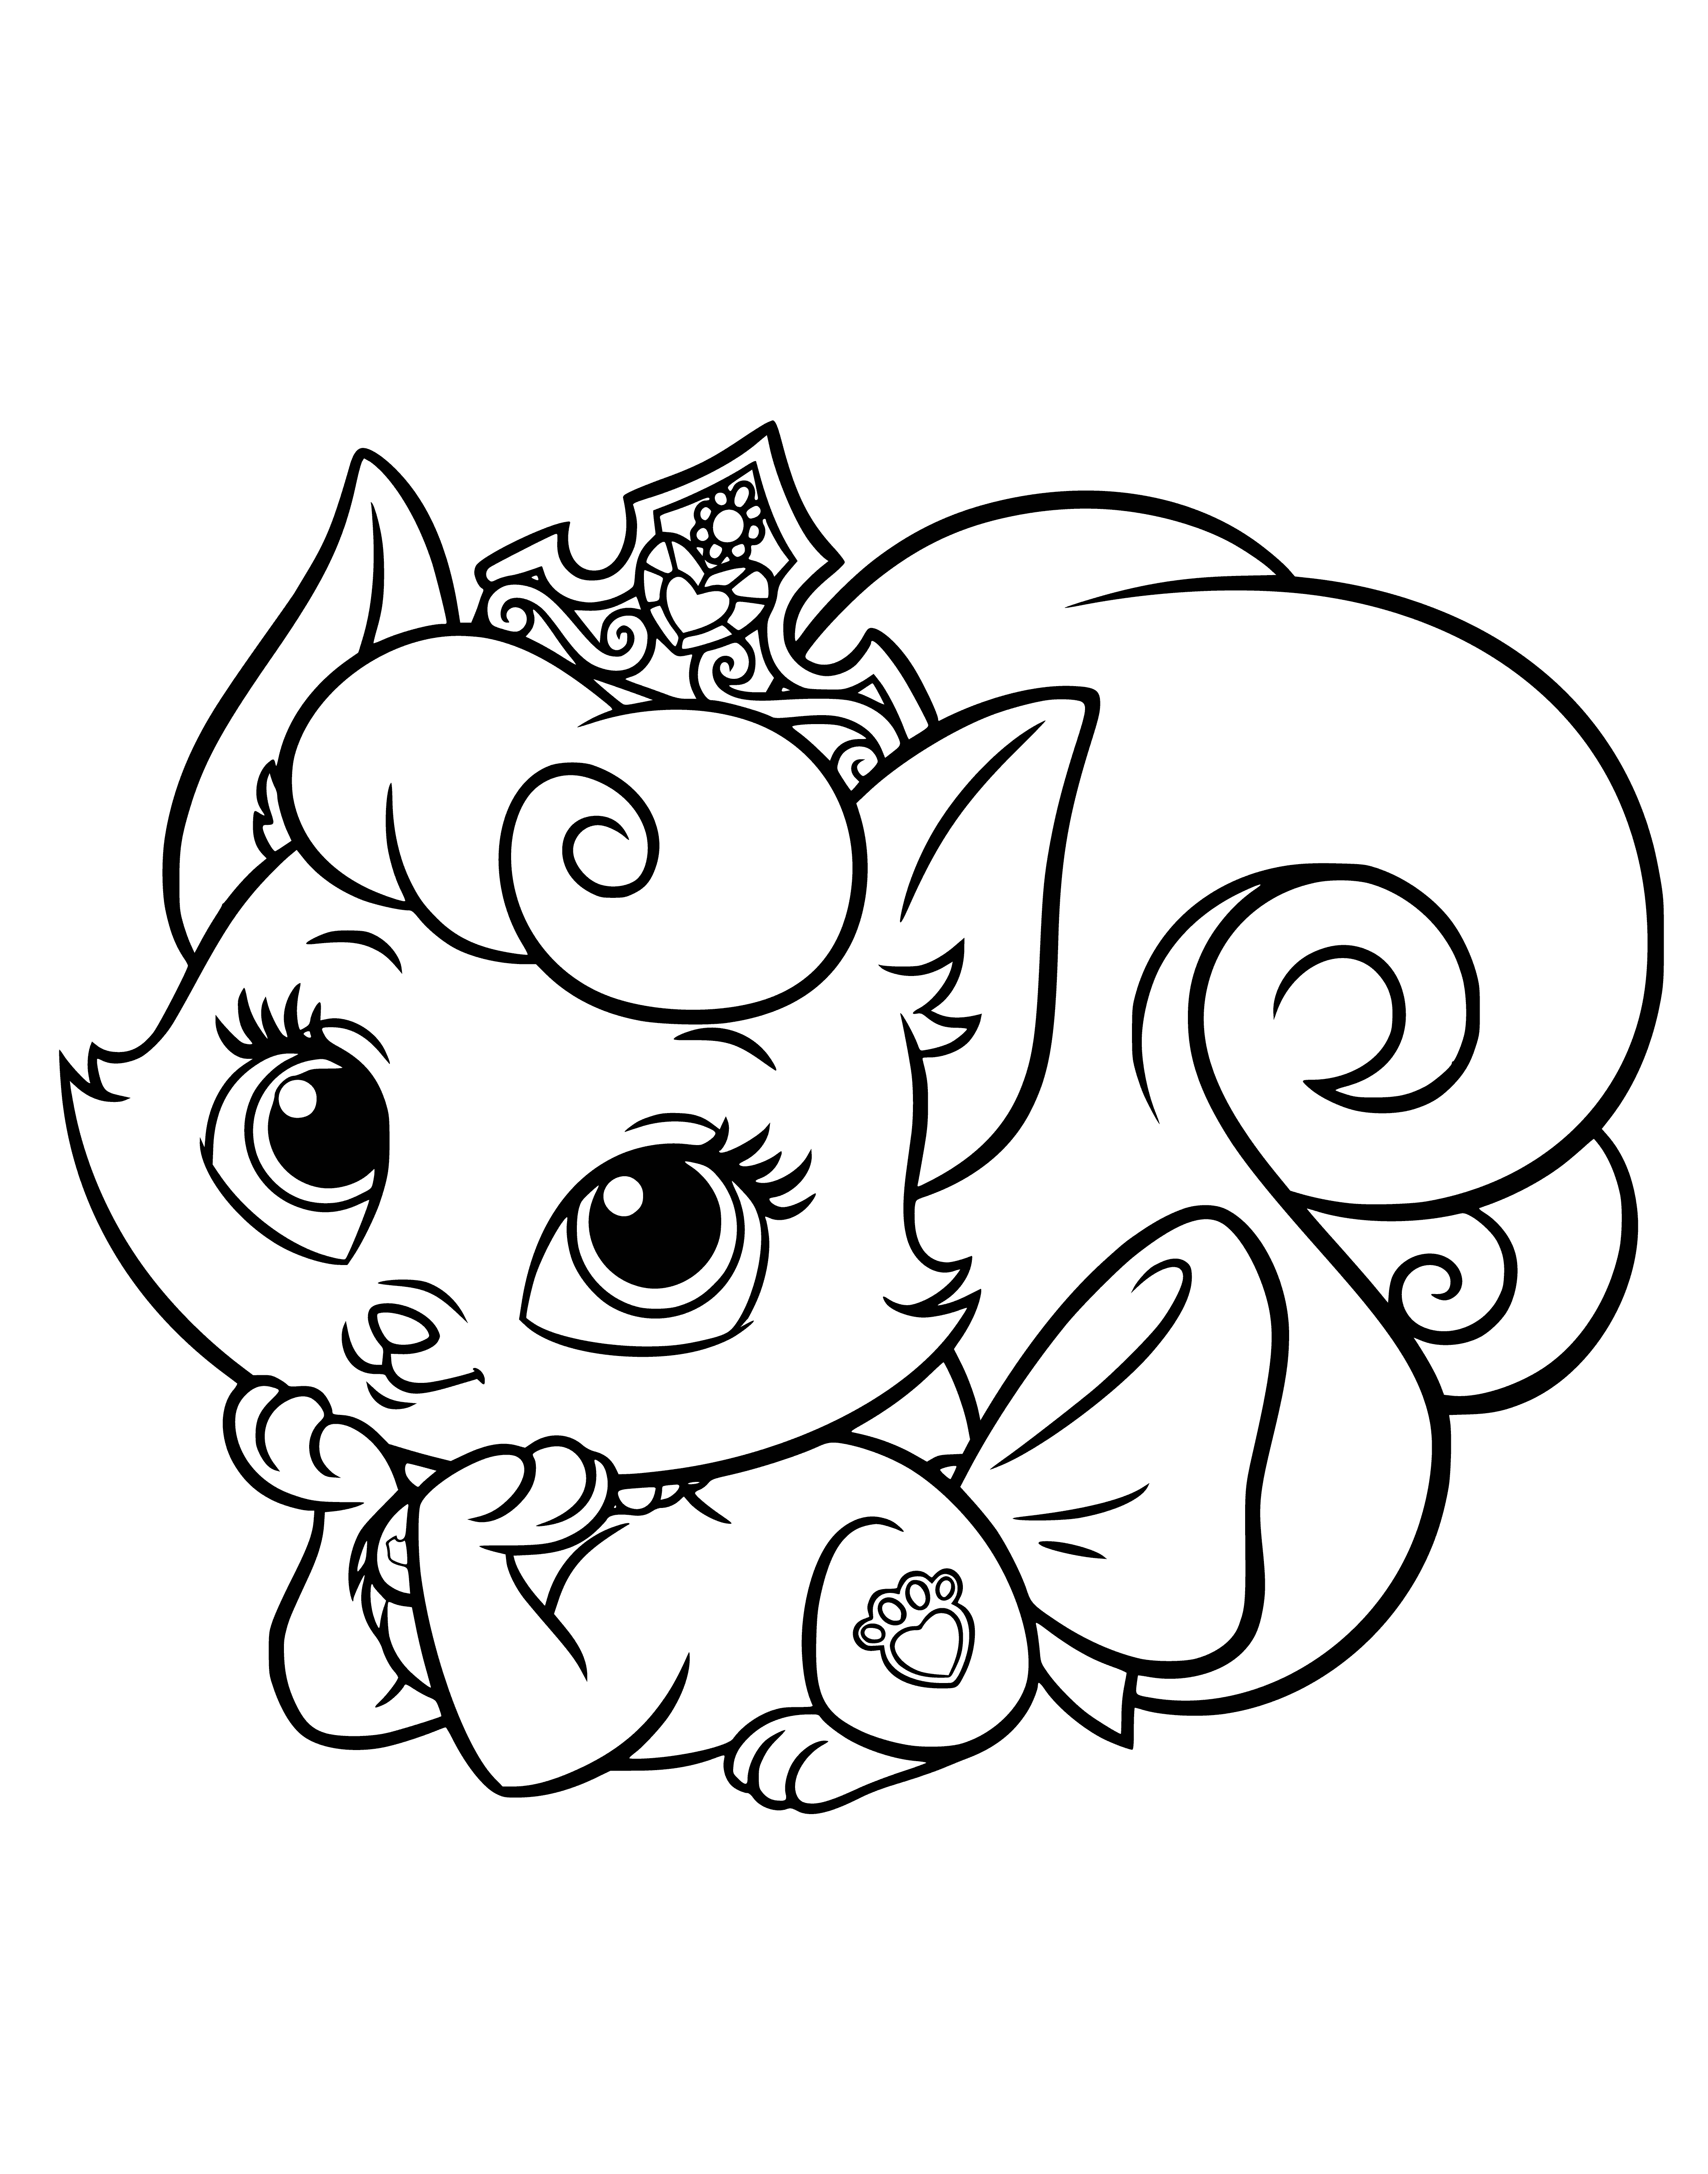 Kitten Cutie. Princess Aurora's pet coloring page